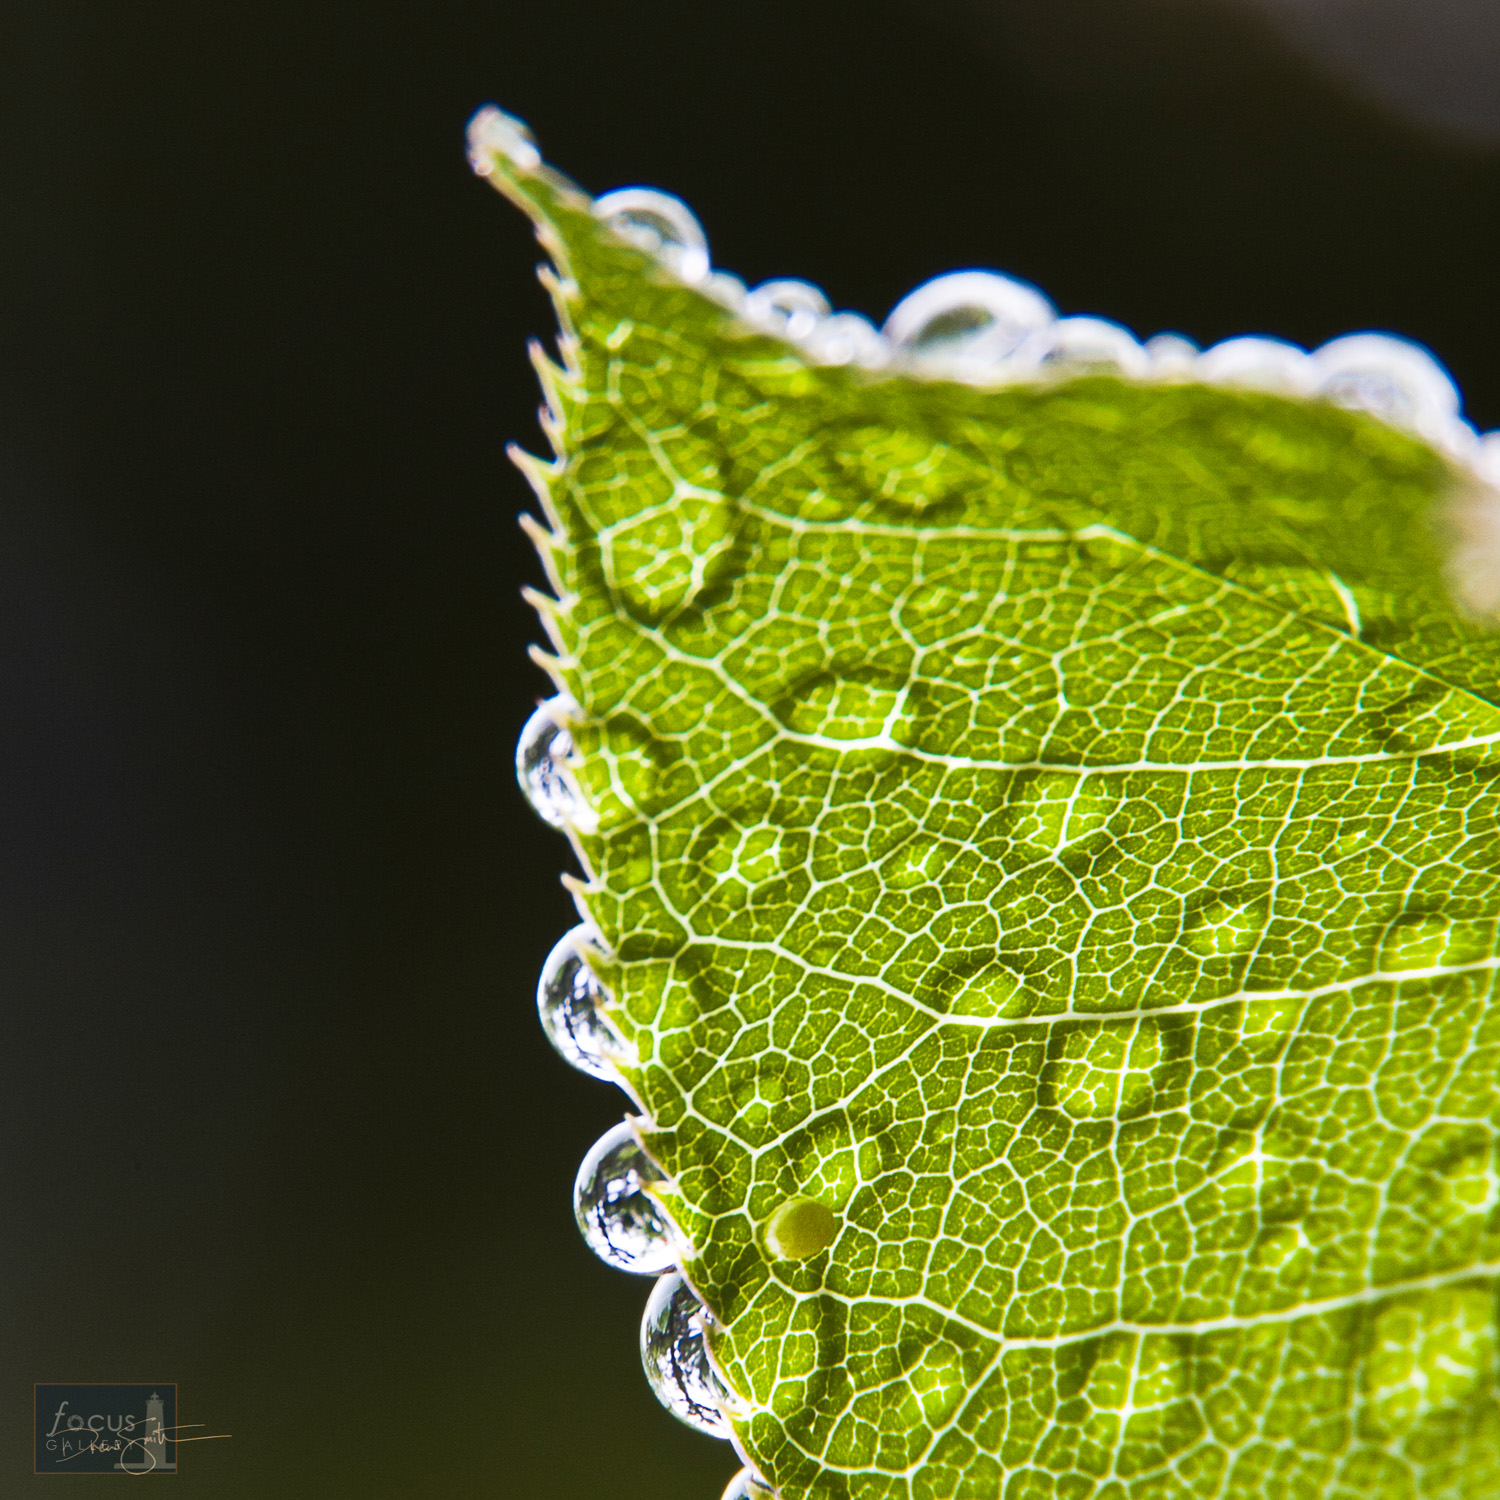 Raindrops on a backlit Black Cherry leaf.